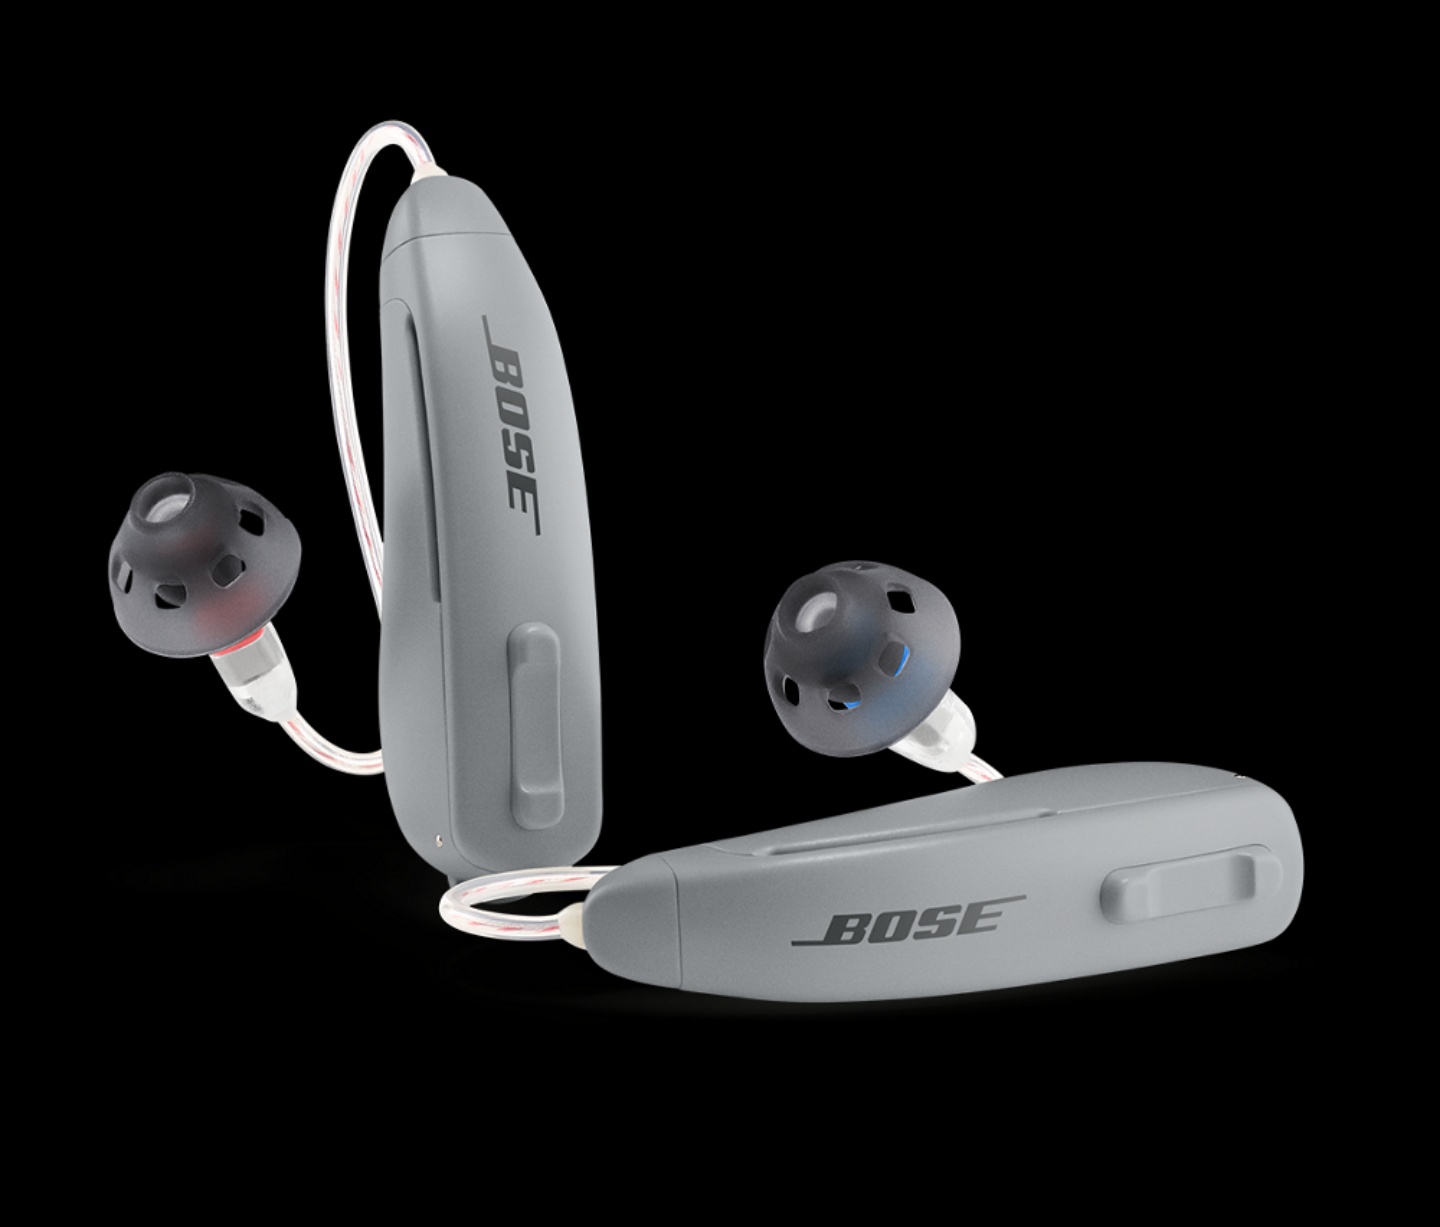 Bose 推出首款醫療級助聽器『 SoundControl 』 通過美國 FDA 認證，售價 850 美元